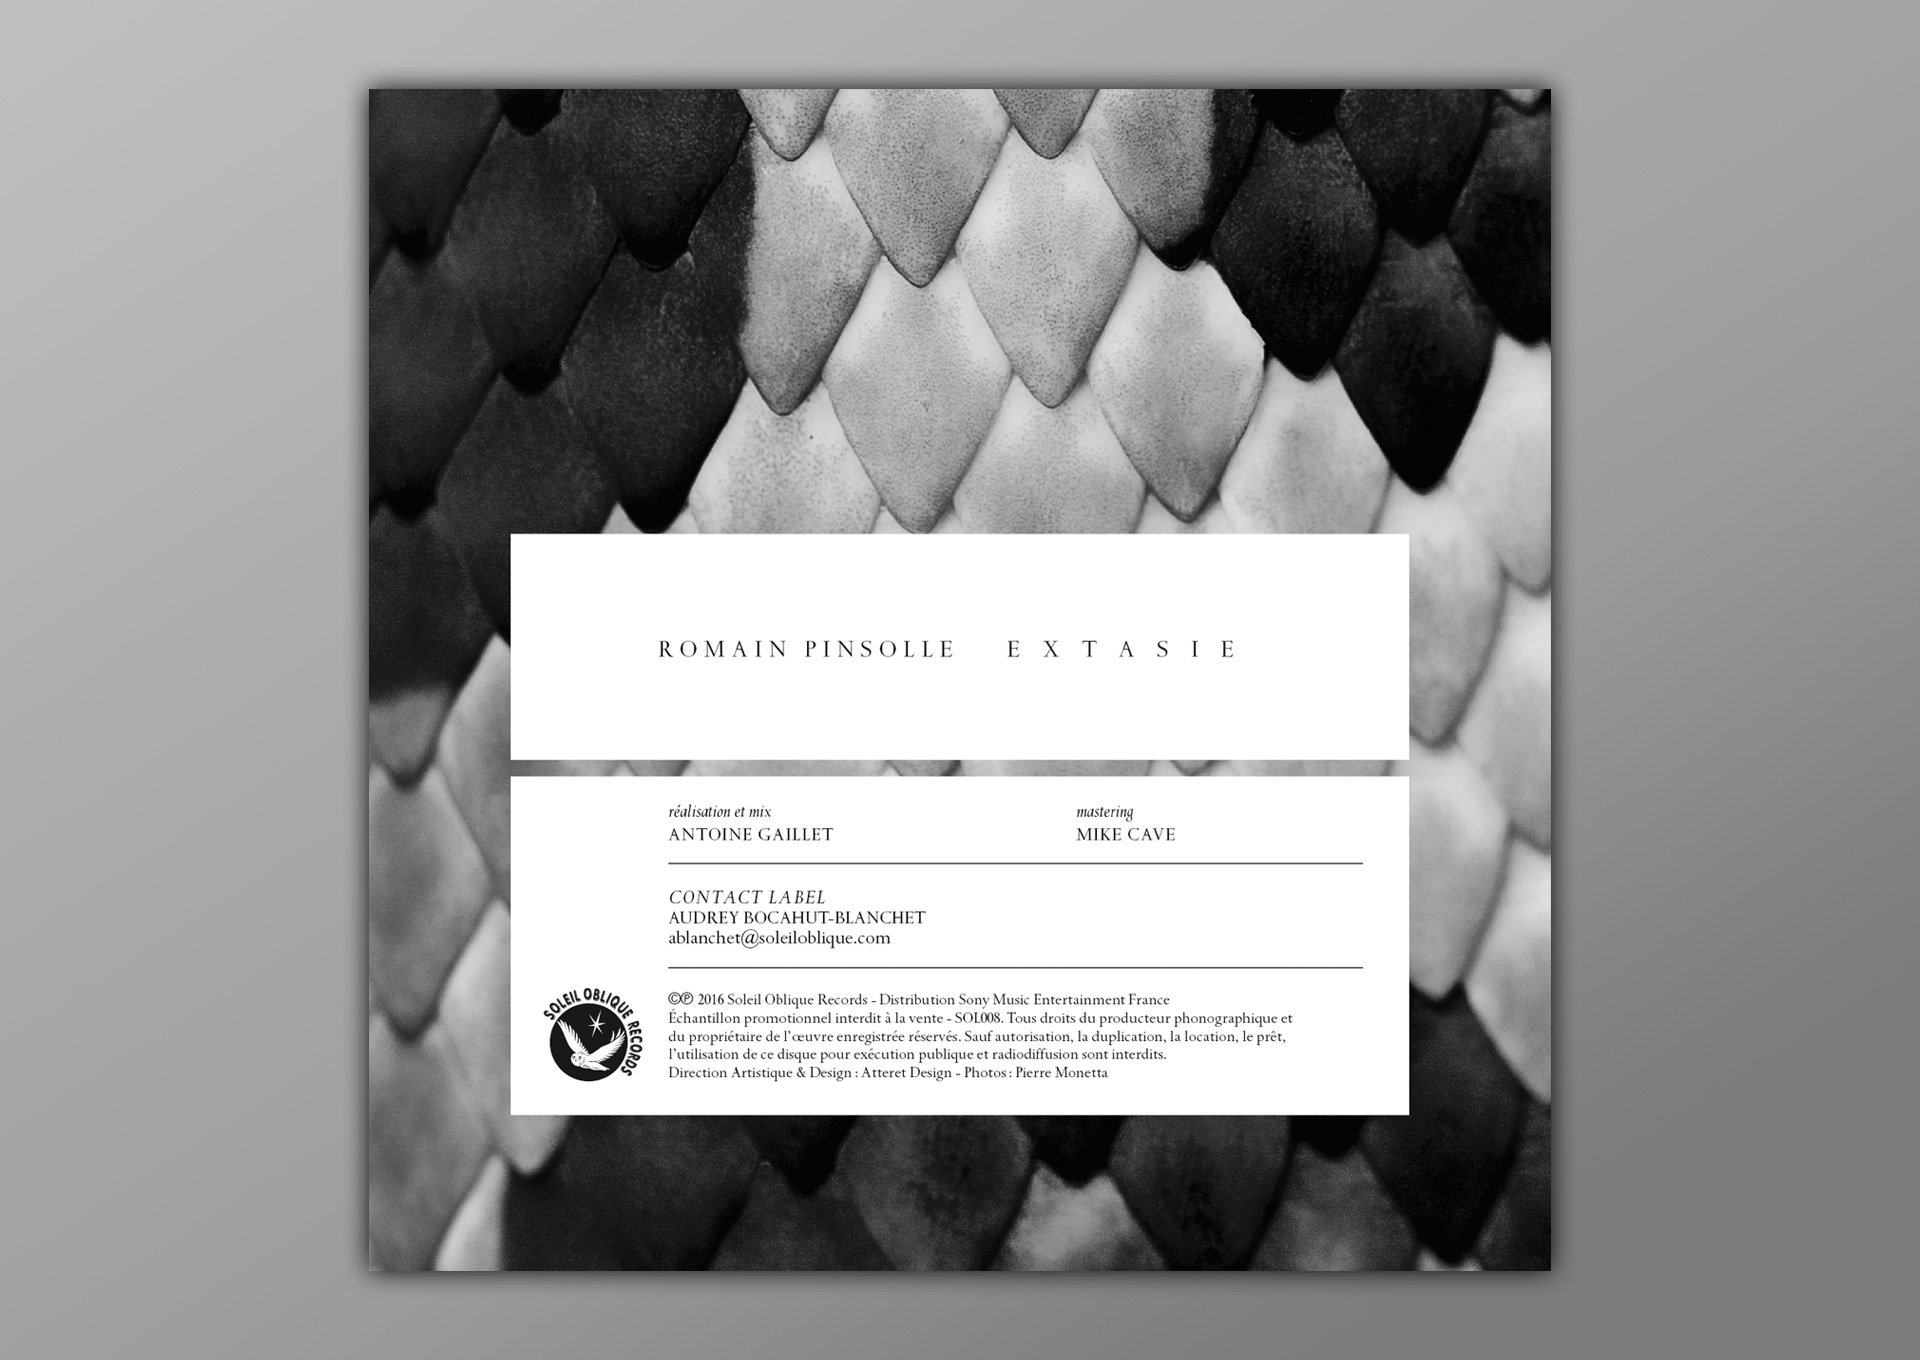  Romain Pinsolle – Extasie Atteret Design